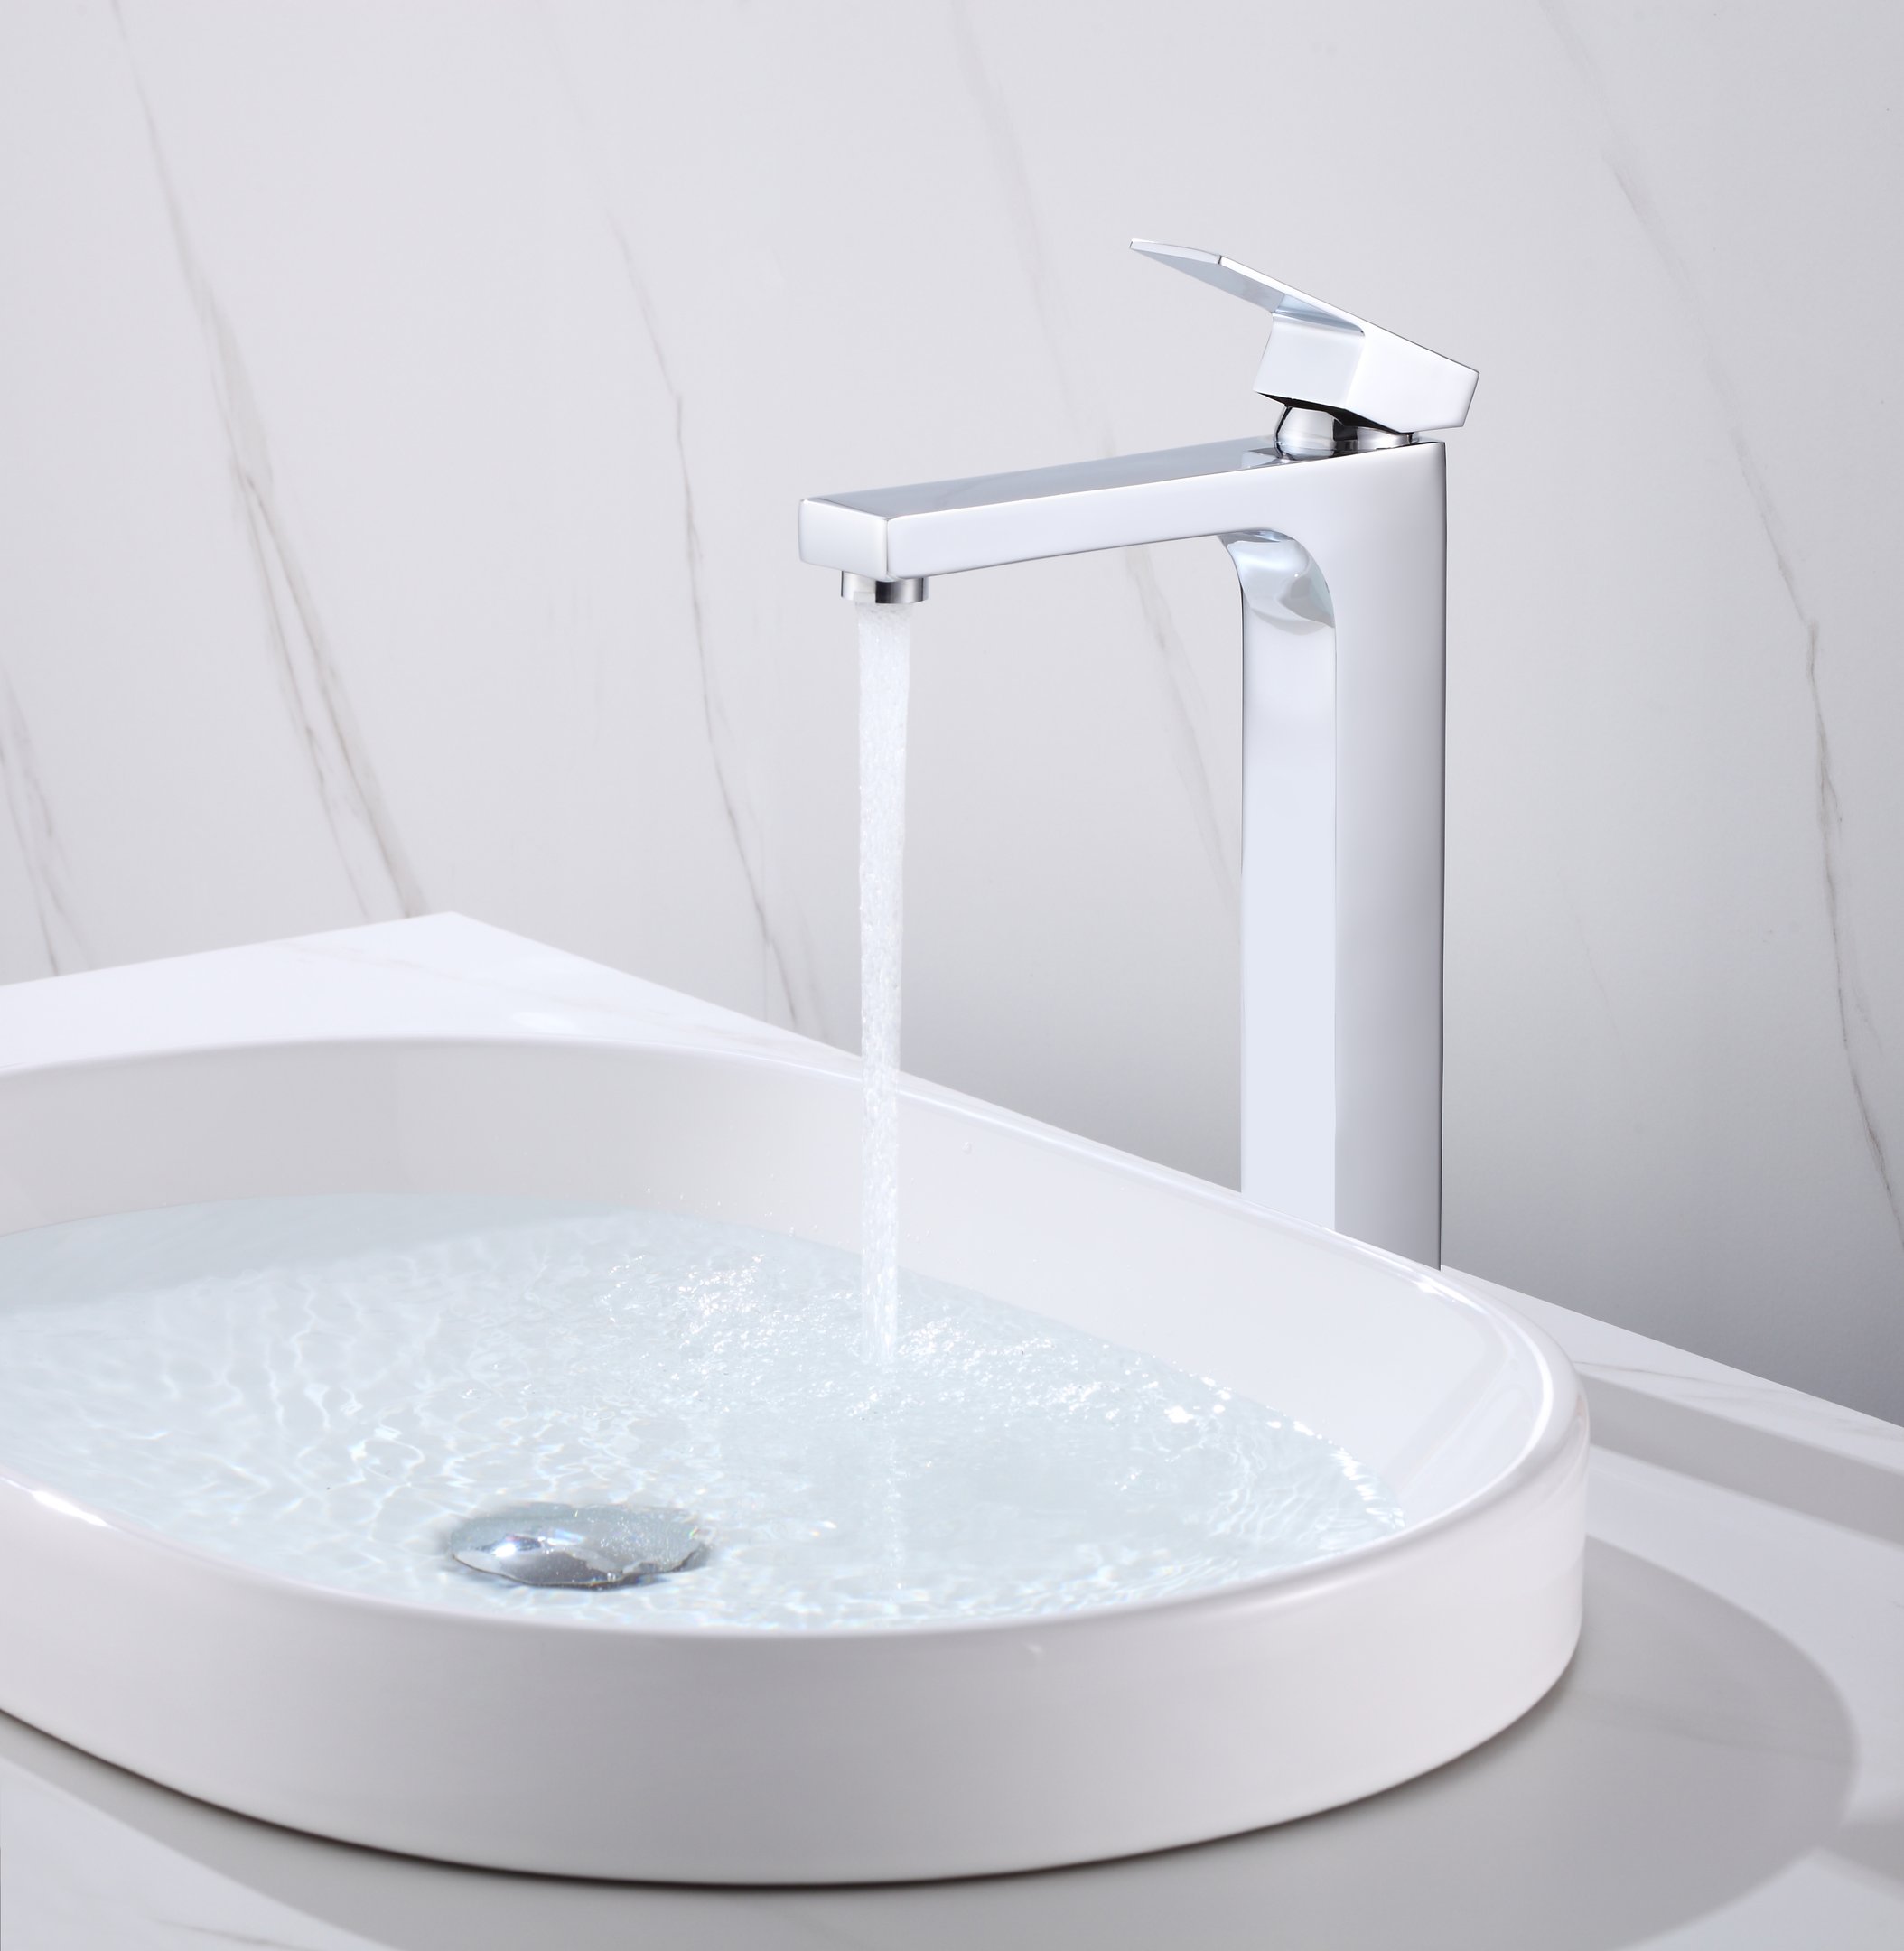 Torneira Monocomando Cromada Quadrada Banheiro Lavabo Bica Alta Luxo Inovartte In01 - 9